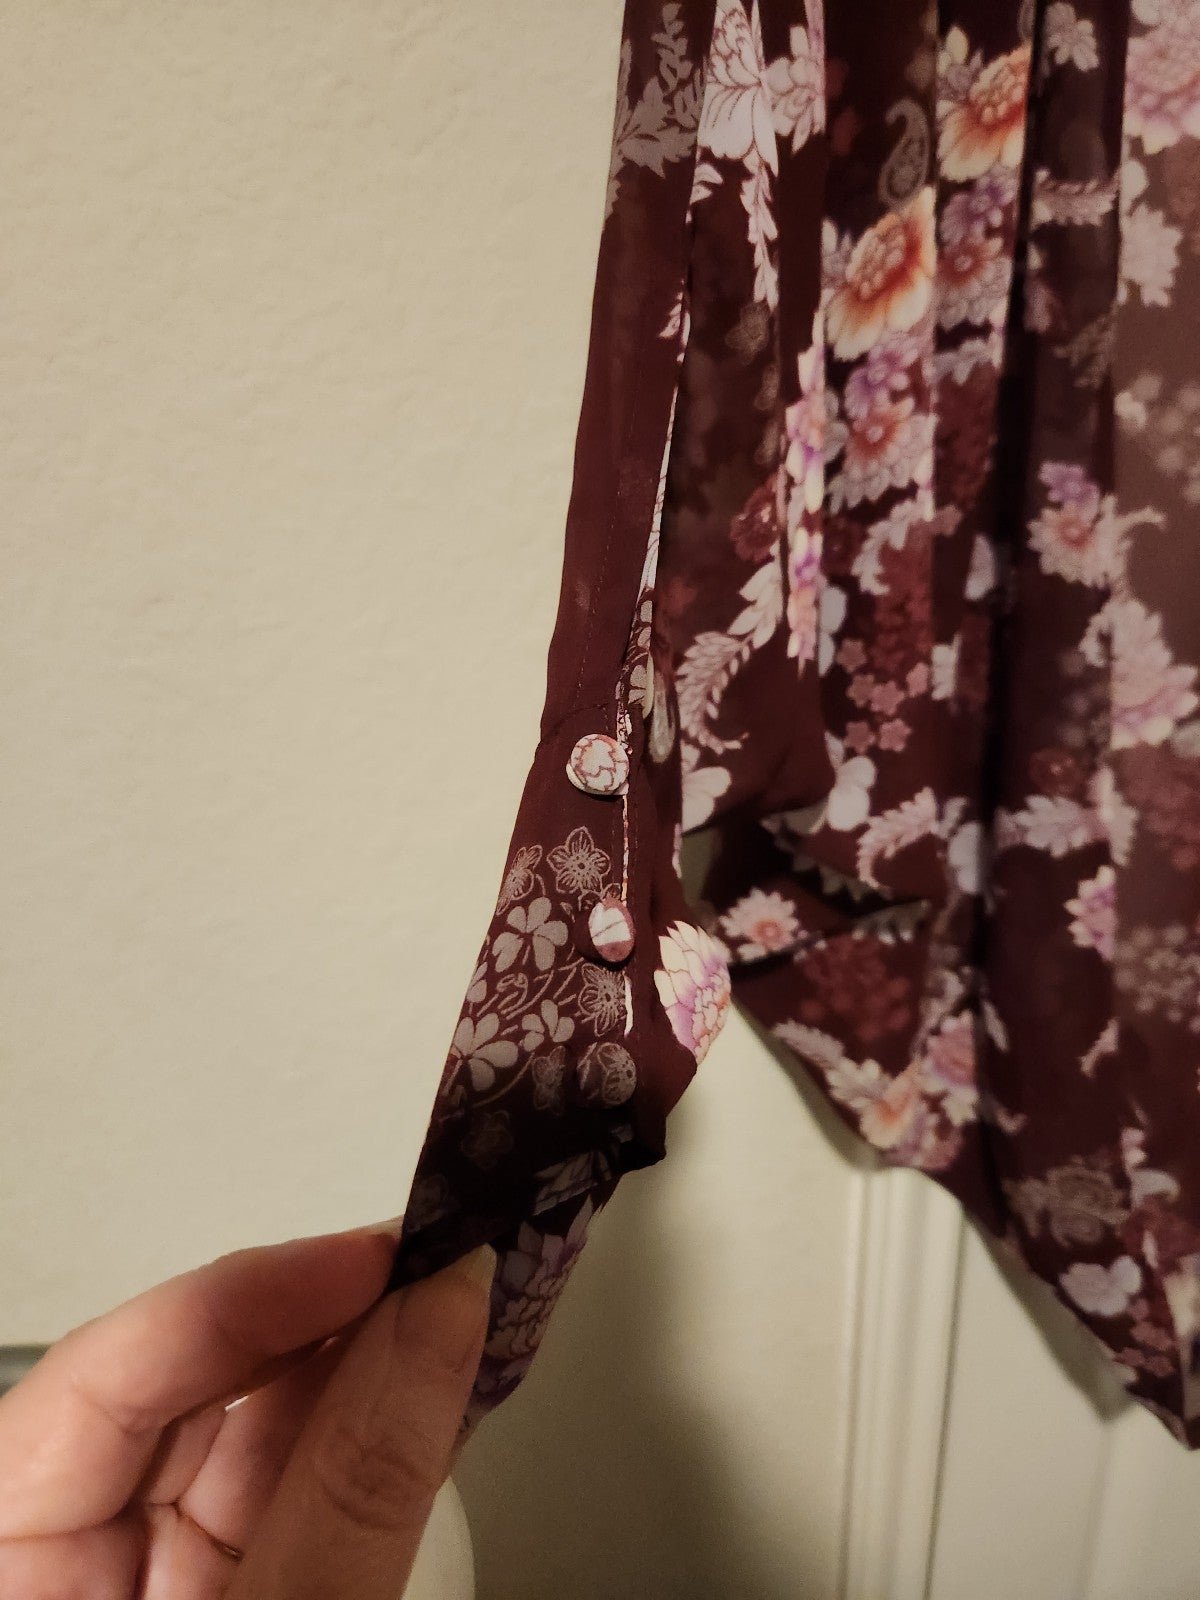 Discounted Women´s pretty floral plum-colored kimono. omMPq6NK1 best sale